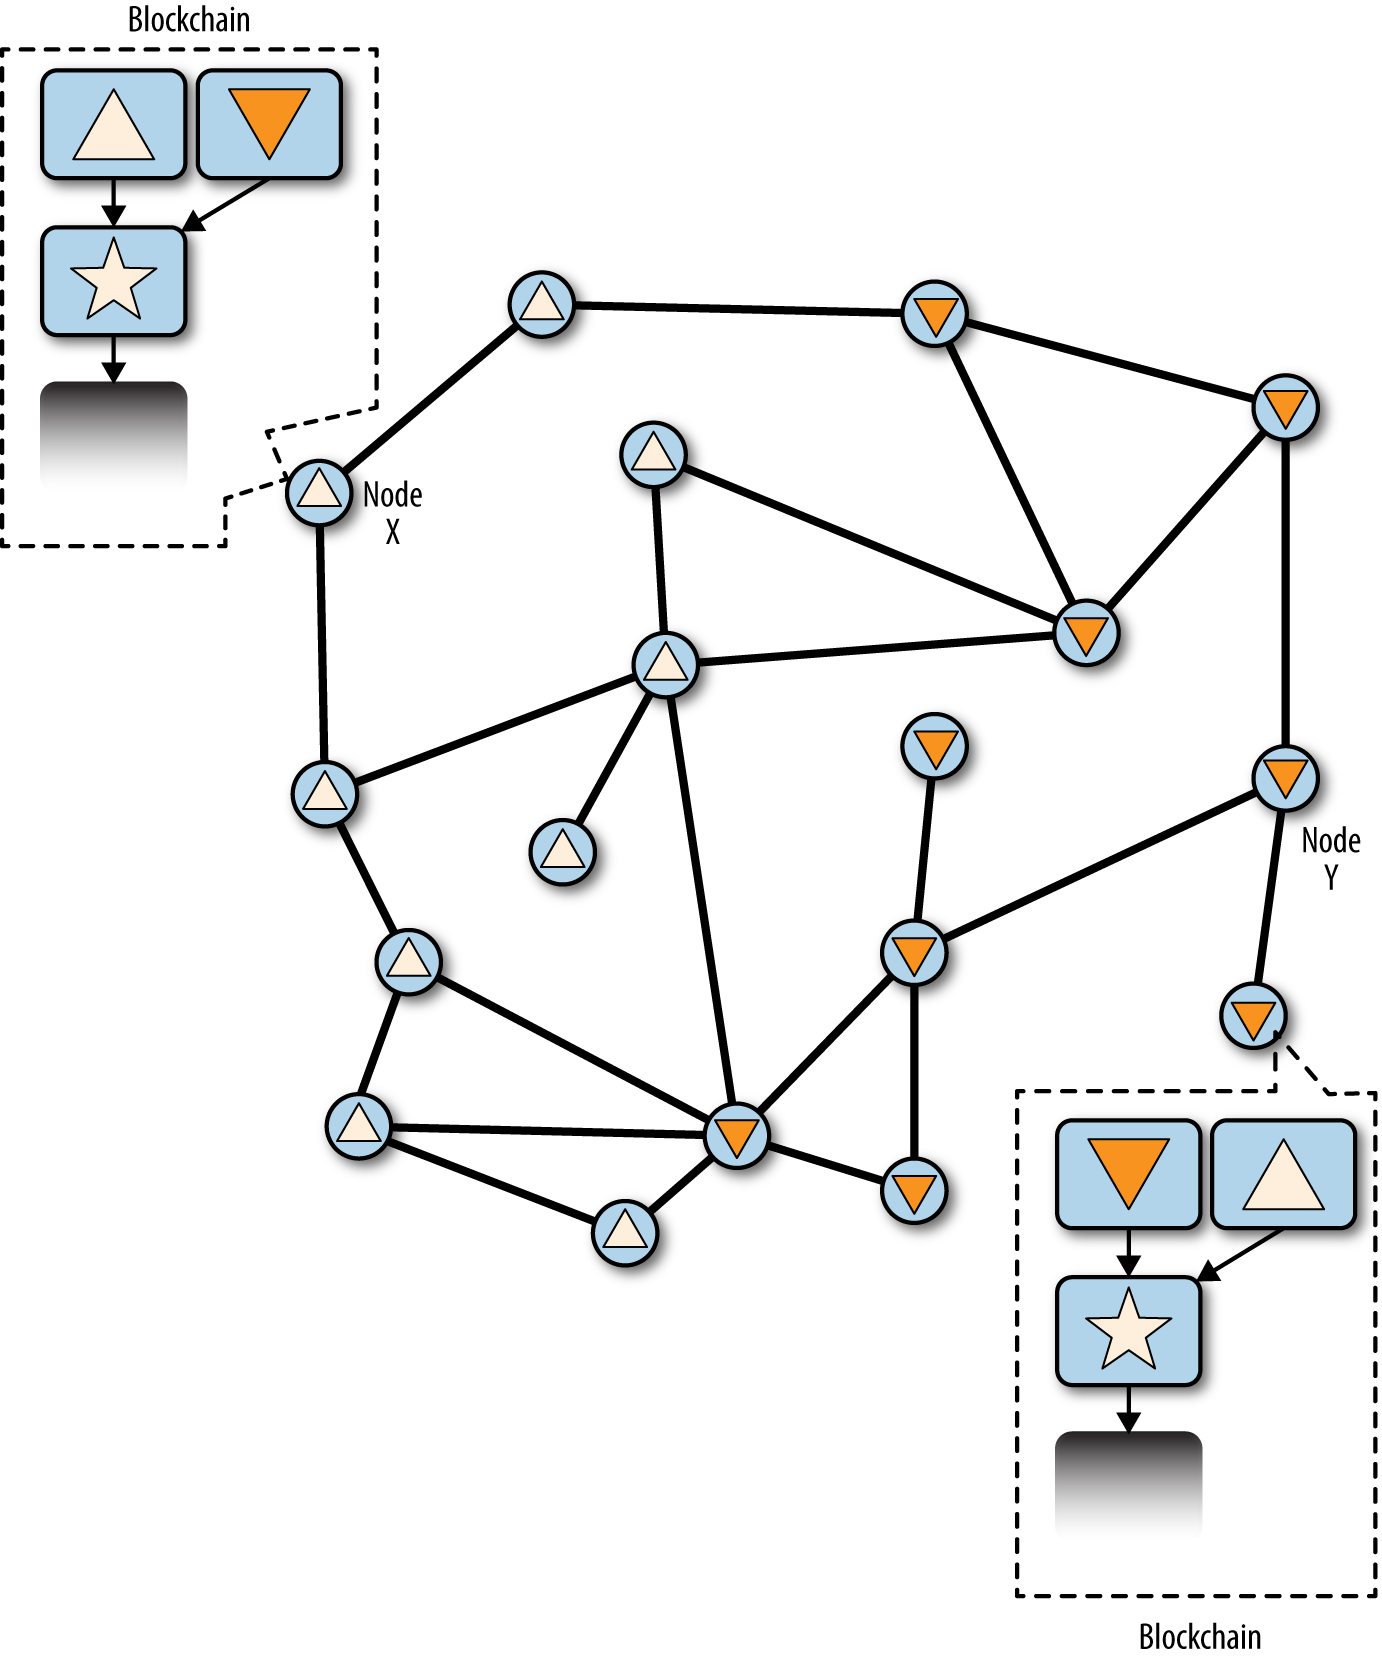 Visualization of a blockchain fork event: two blocks propagate, splitting the network